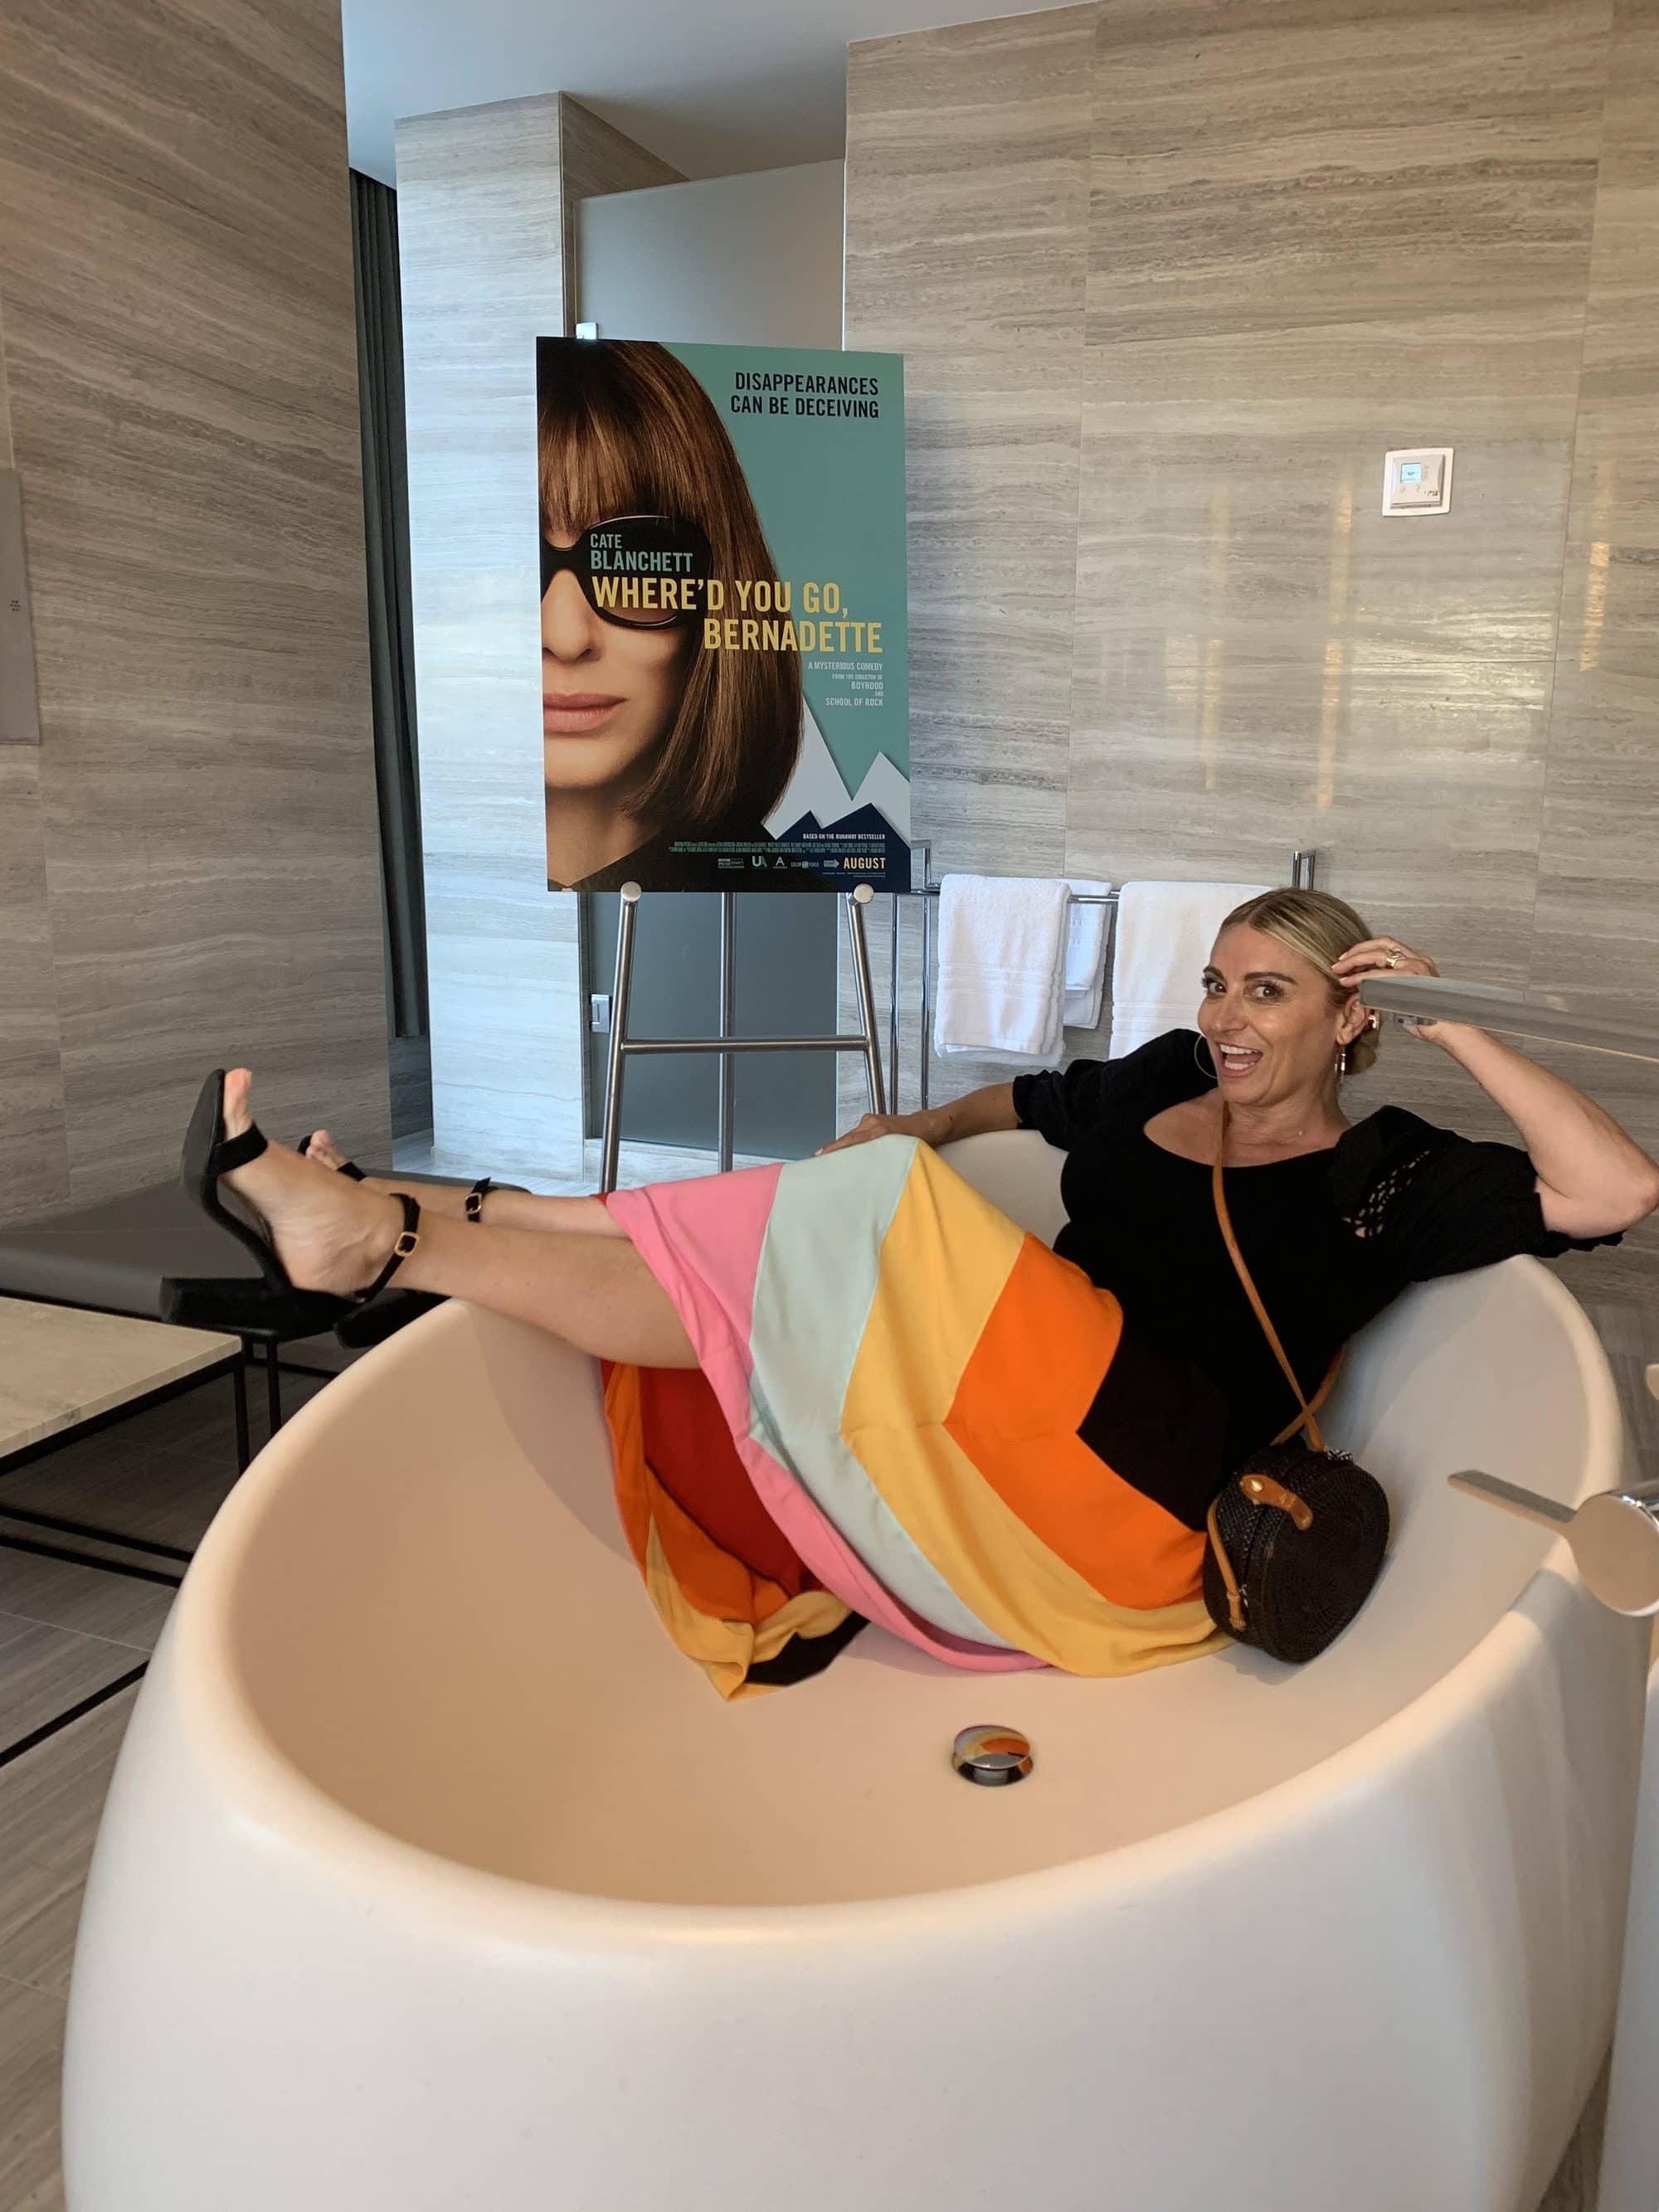 woman in tub